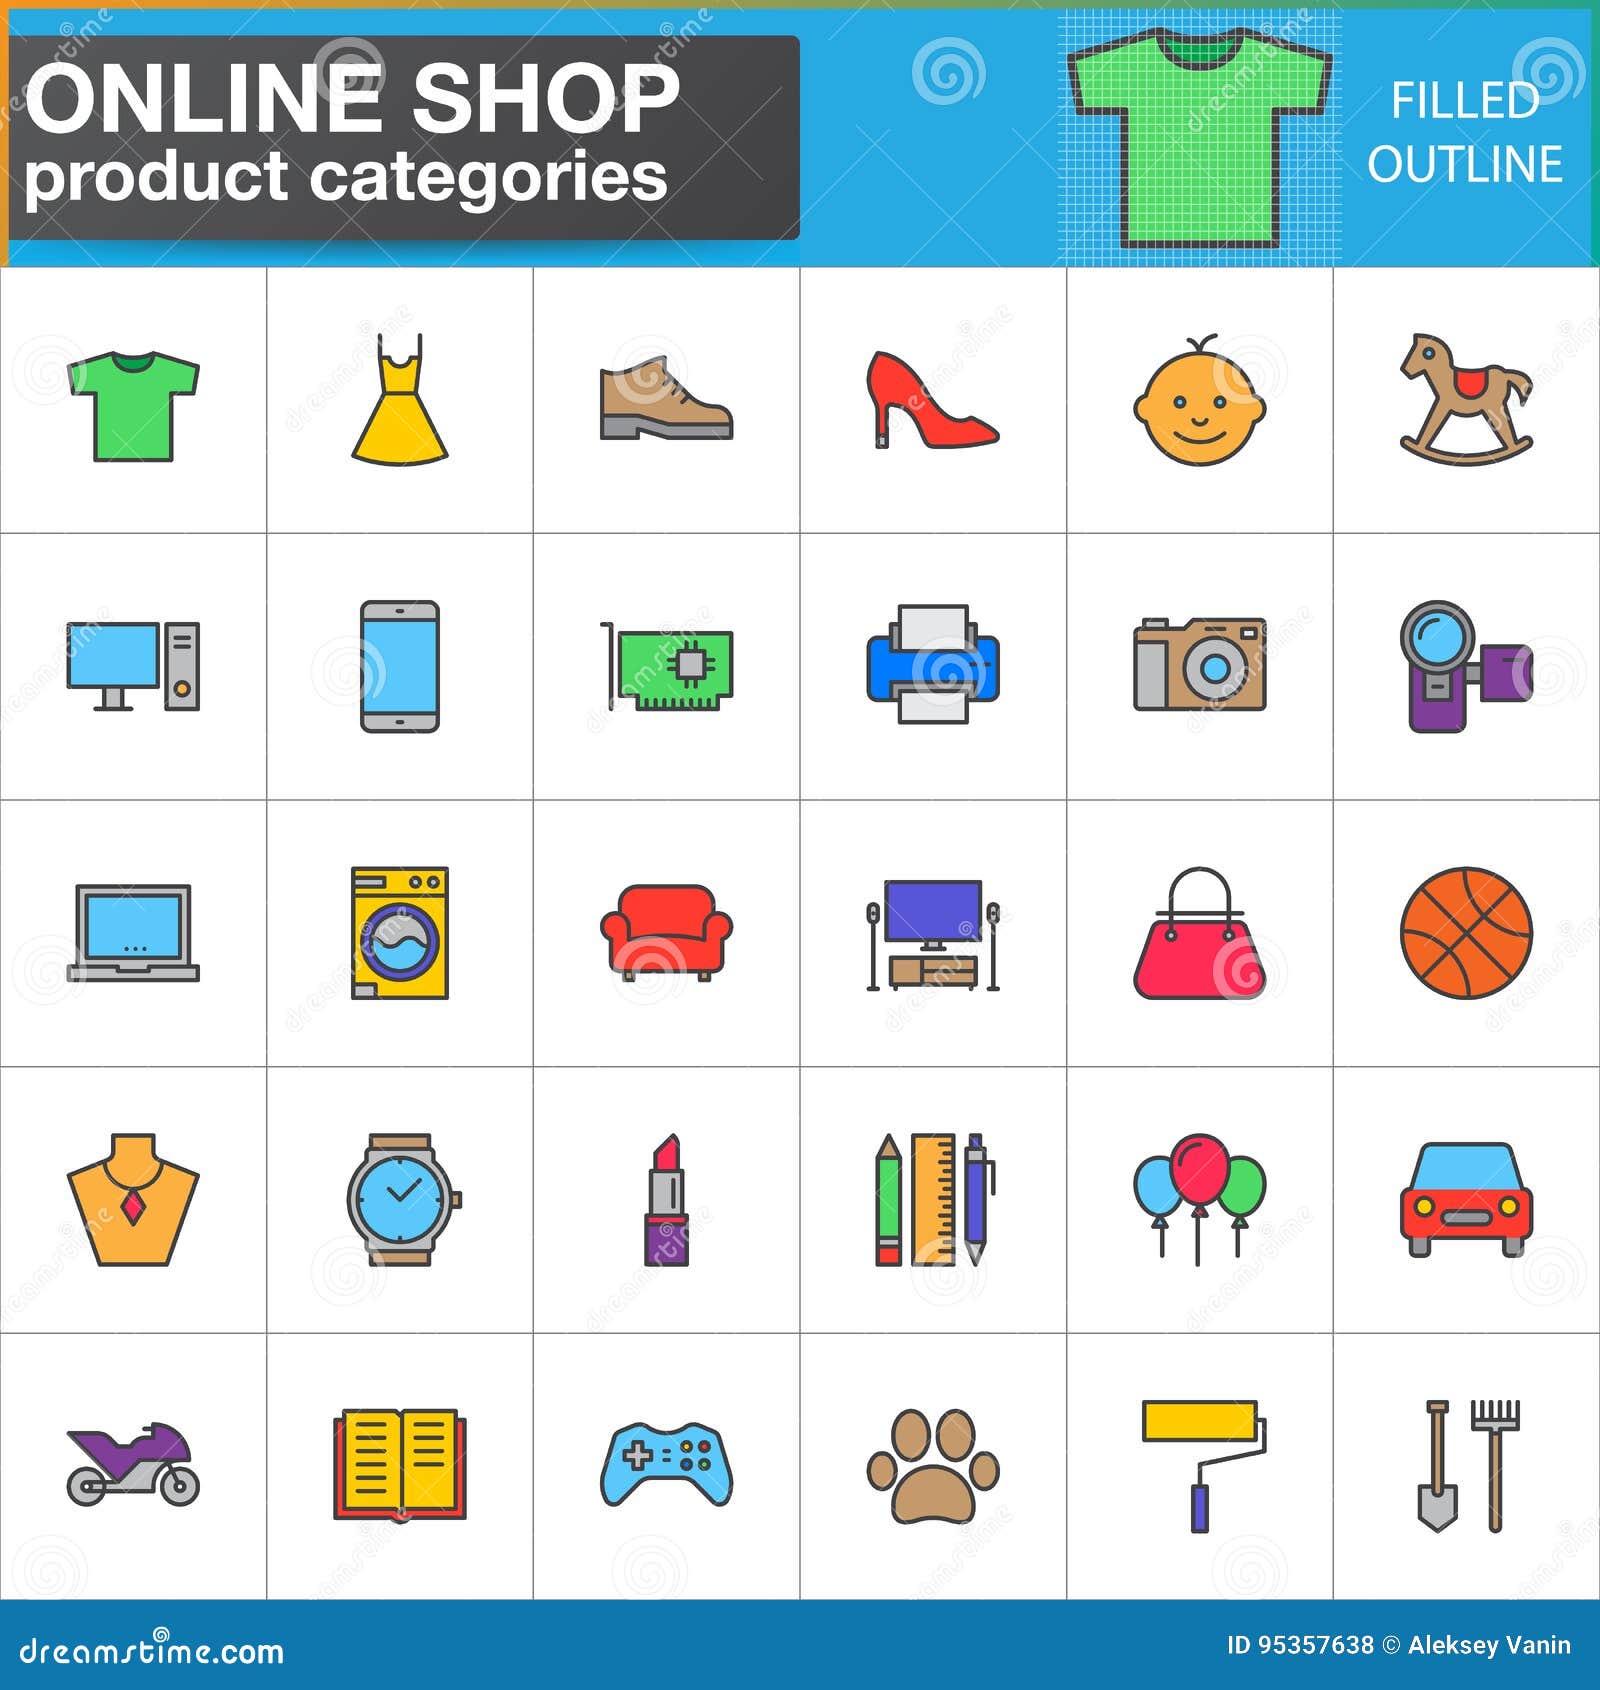 Category Icons & Symbols